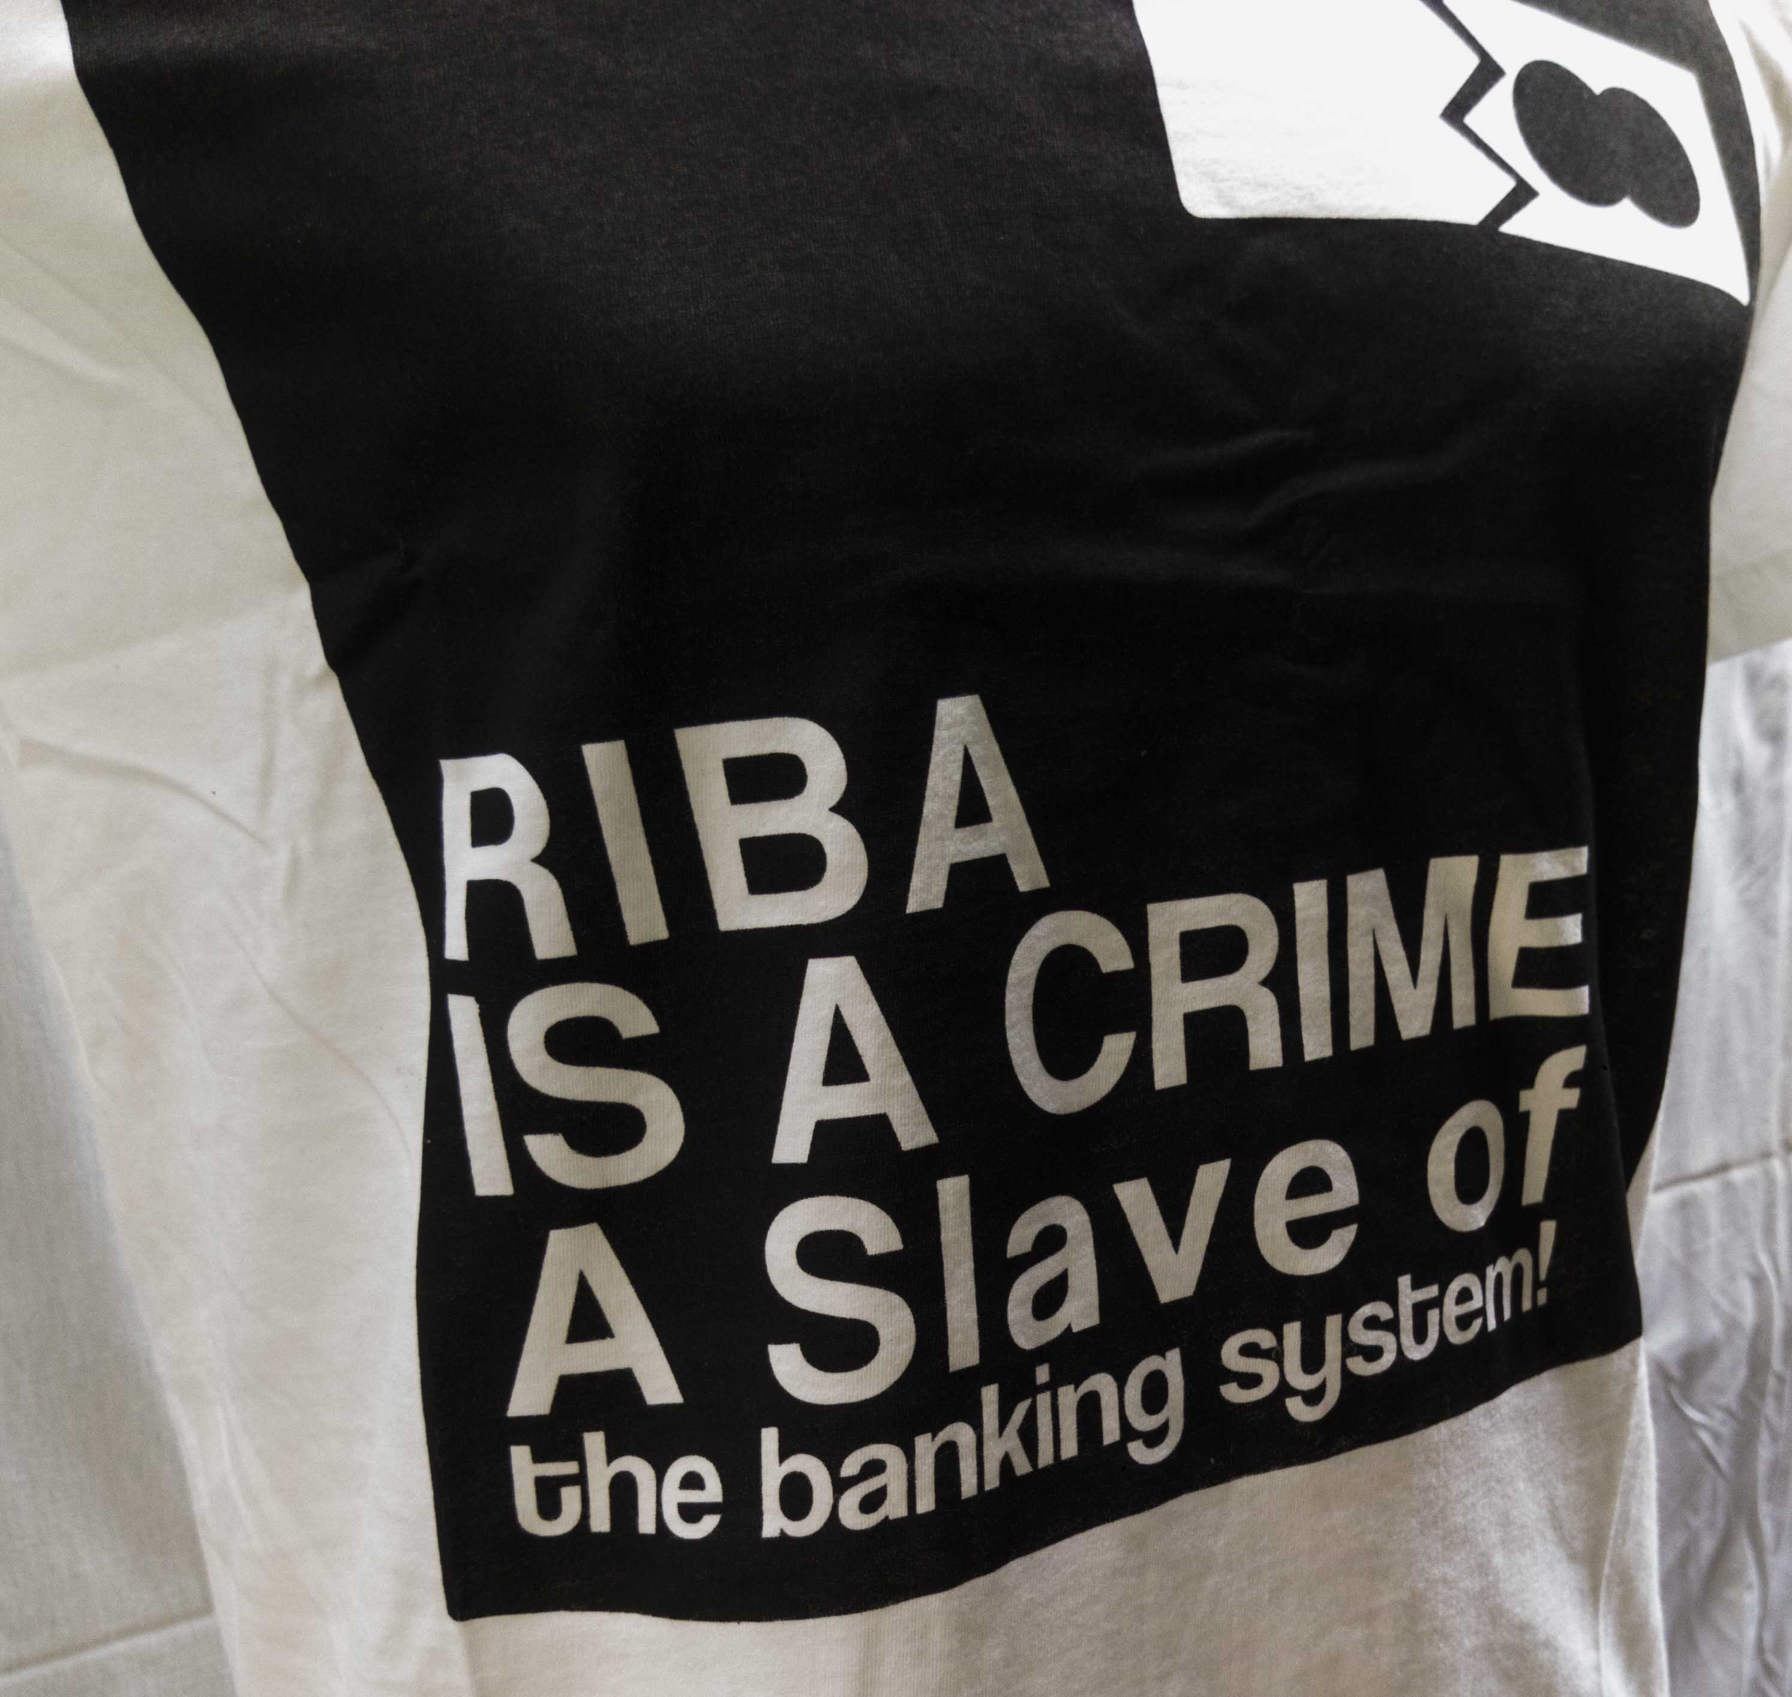 DAMOS - RIBA (Slave of banking system) - PUTIH